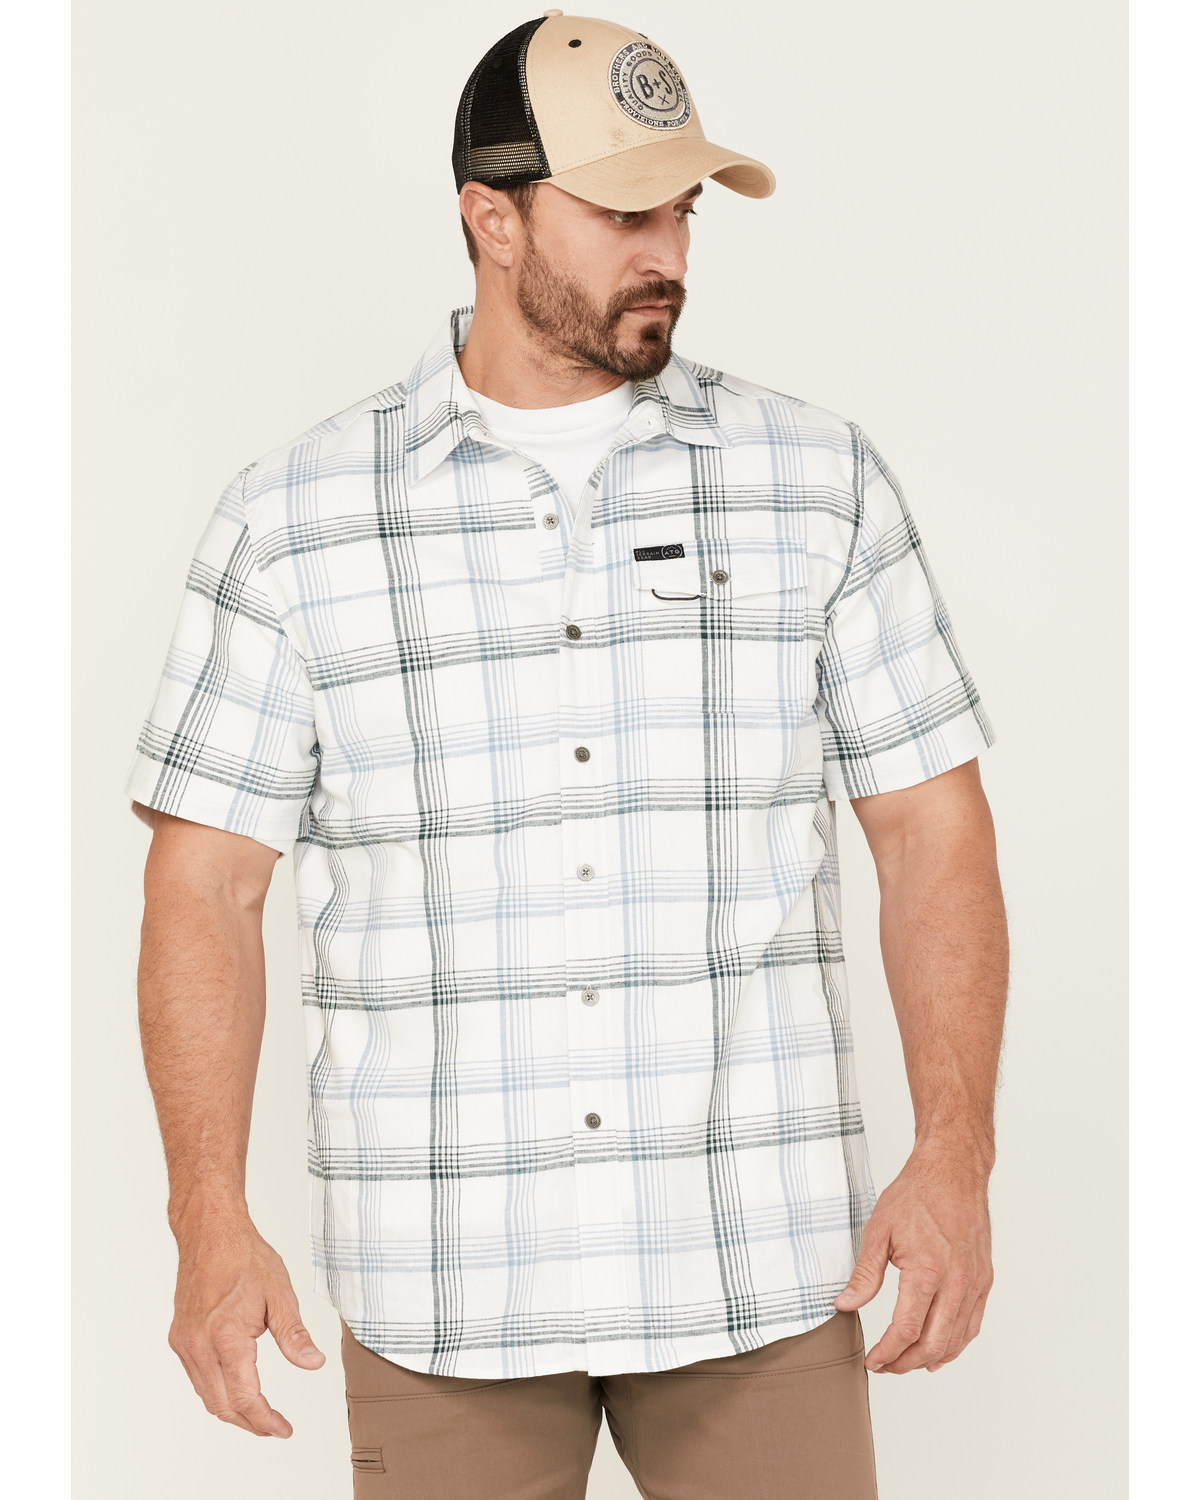 ATG by Wrangler Men's All-Terrain Hemp Utility Plaid Denim Short Sleeve Shirt